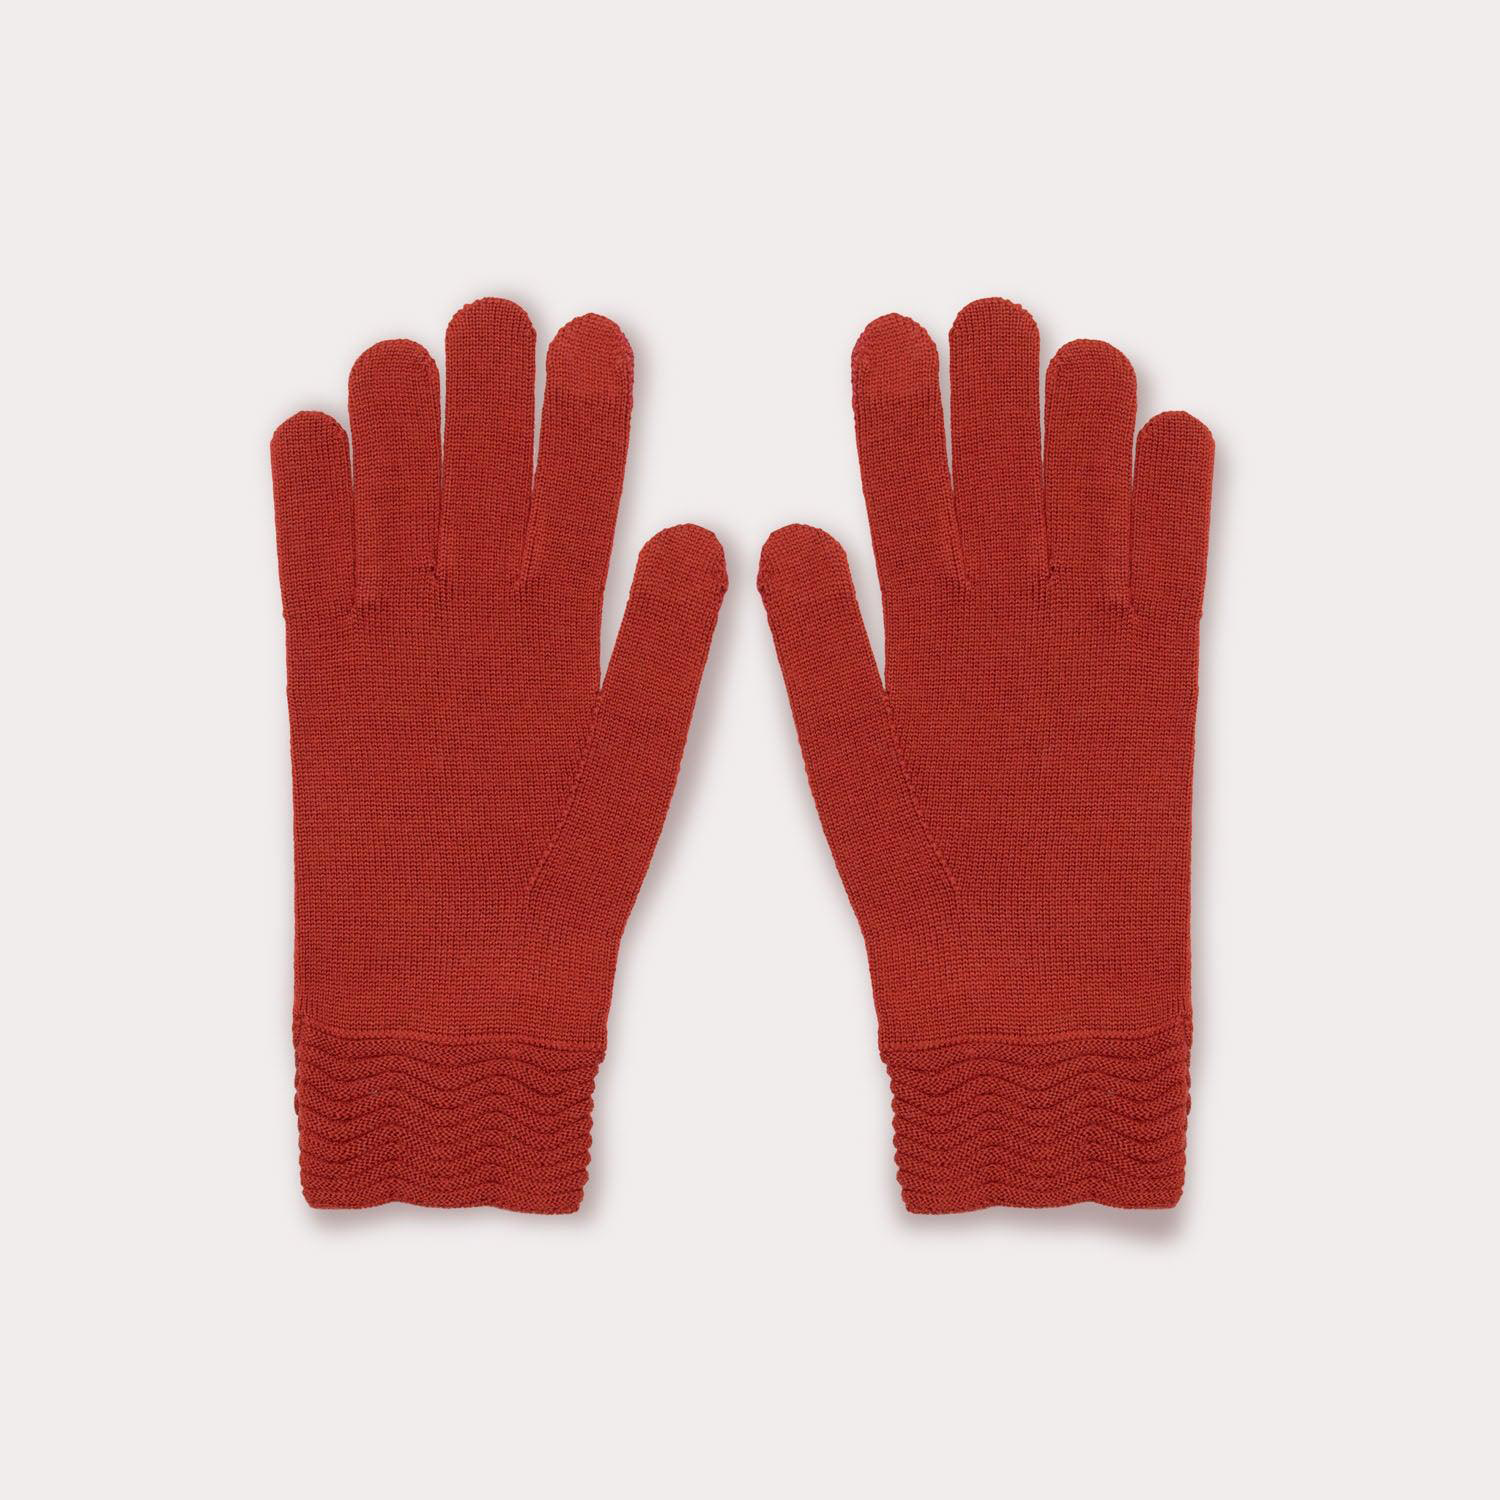 Seymoure Gloves, Tech wool glove, winter, designer, sustainable luxury